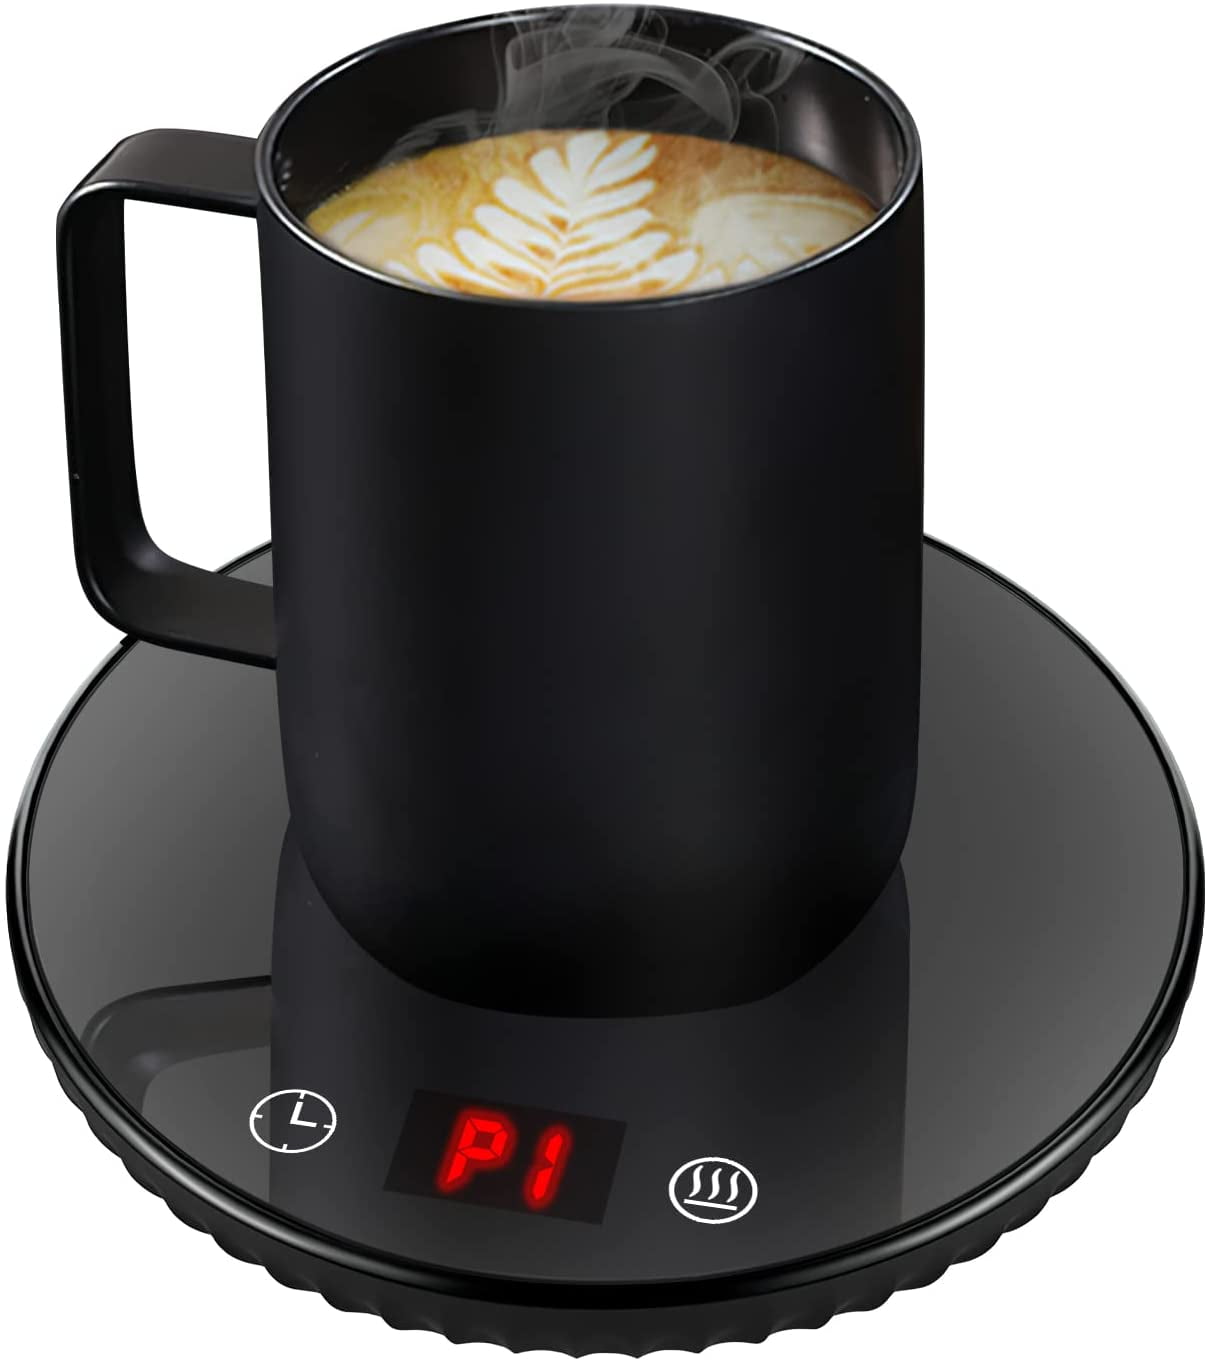 SCOBUTY Coffee Warmer,Coffee Mug Warmer Cup Warmer,Electric